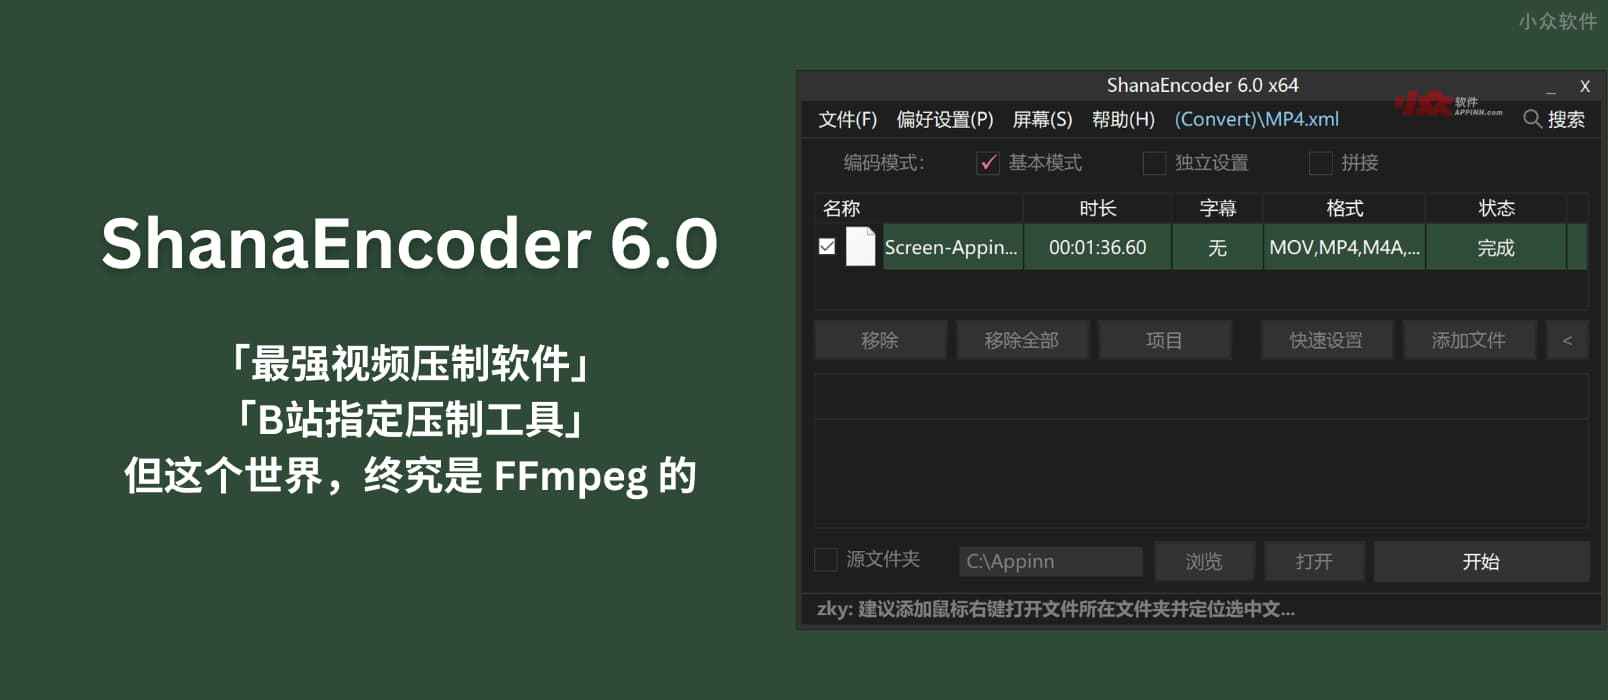 ShanaEncoder 6.0 – 「最强视频压制软件」「B站指定压制工具」｜但这个世界，终究是 FFmpeg 的